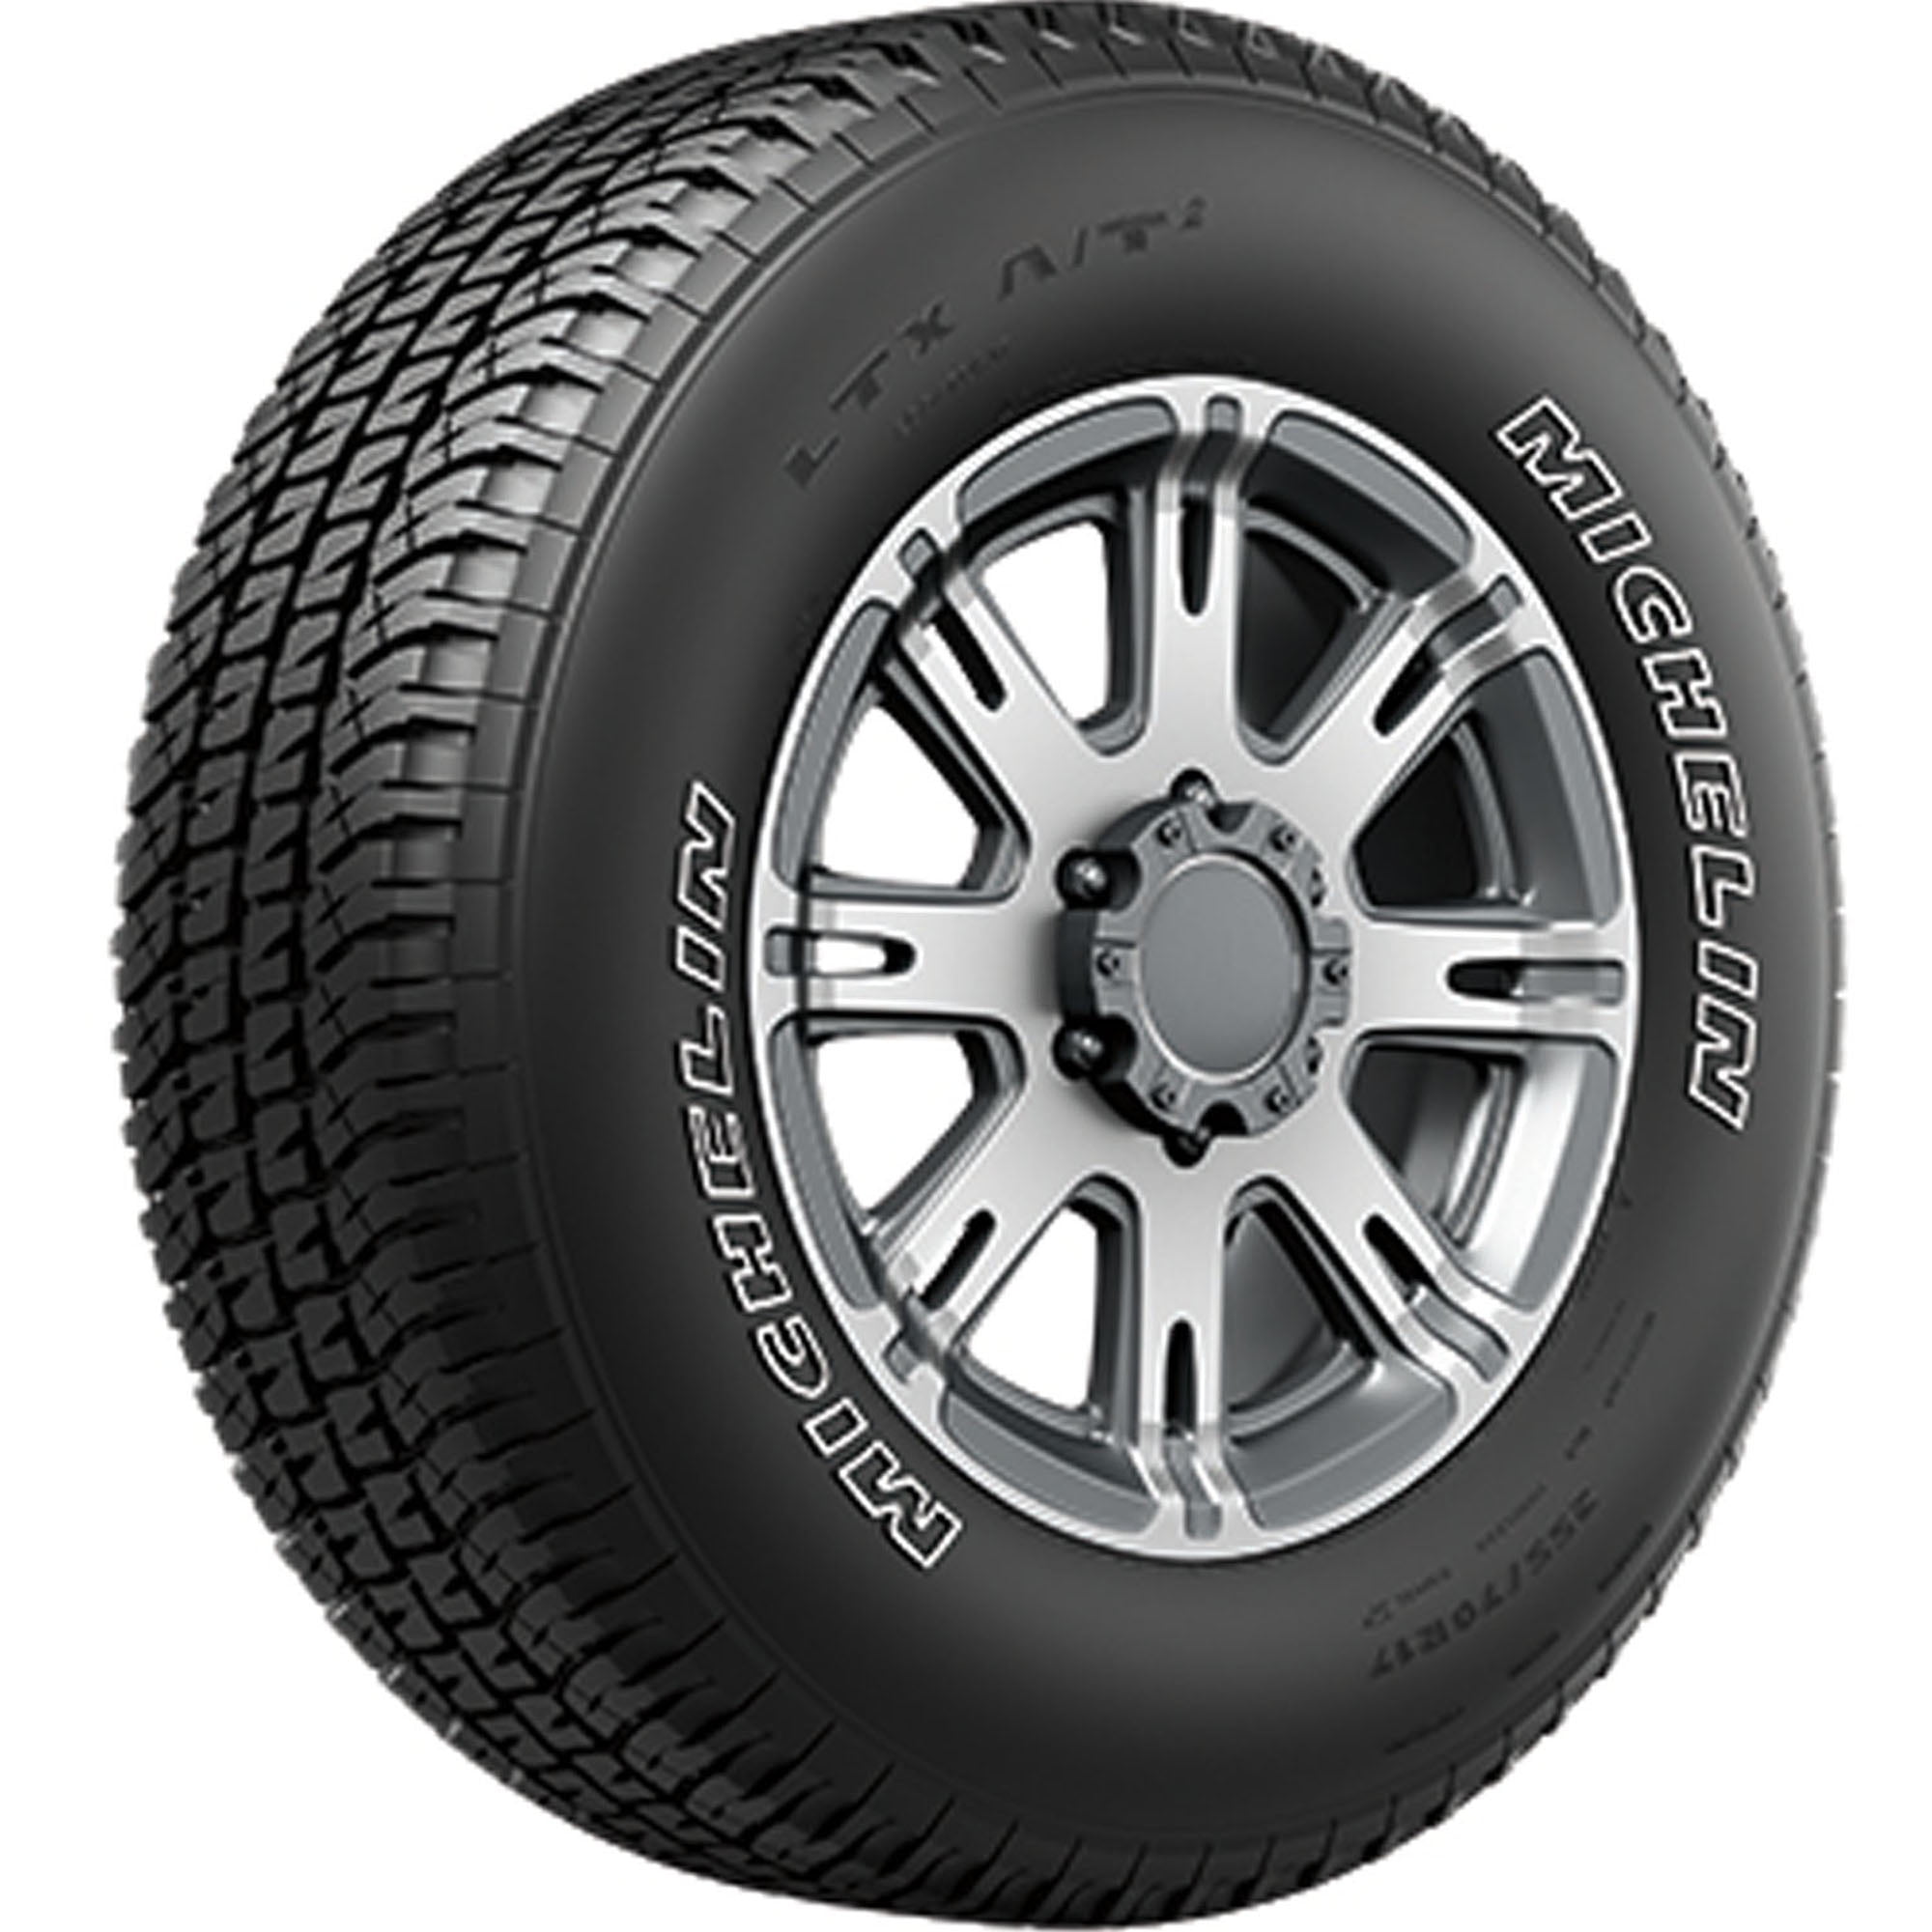 Pirelli Scorpion Terrain Tire Plus Truck Light 113T 275/55R20 All Terrain All